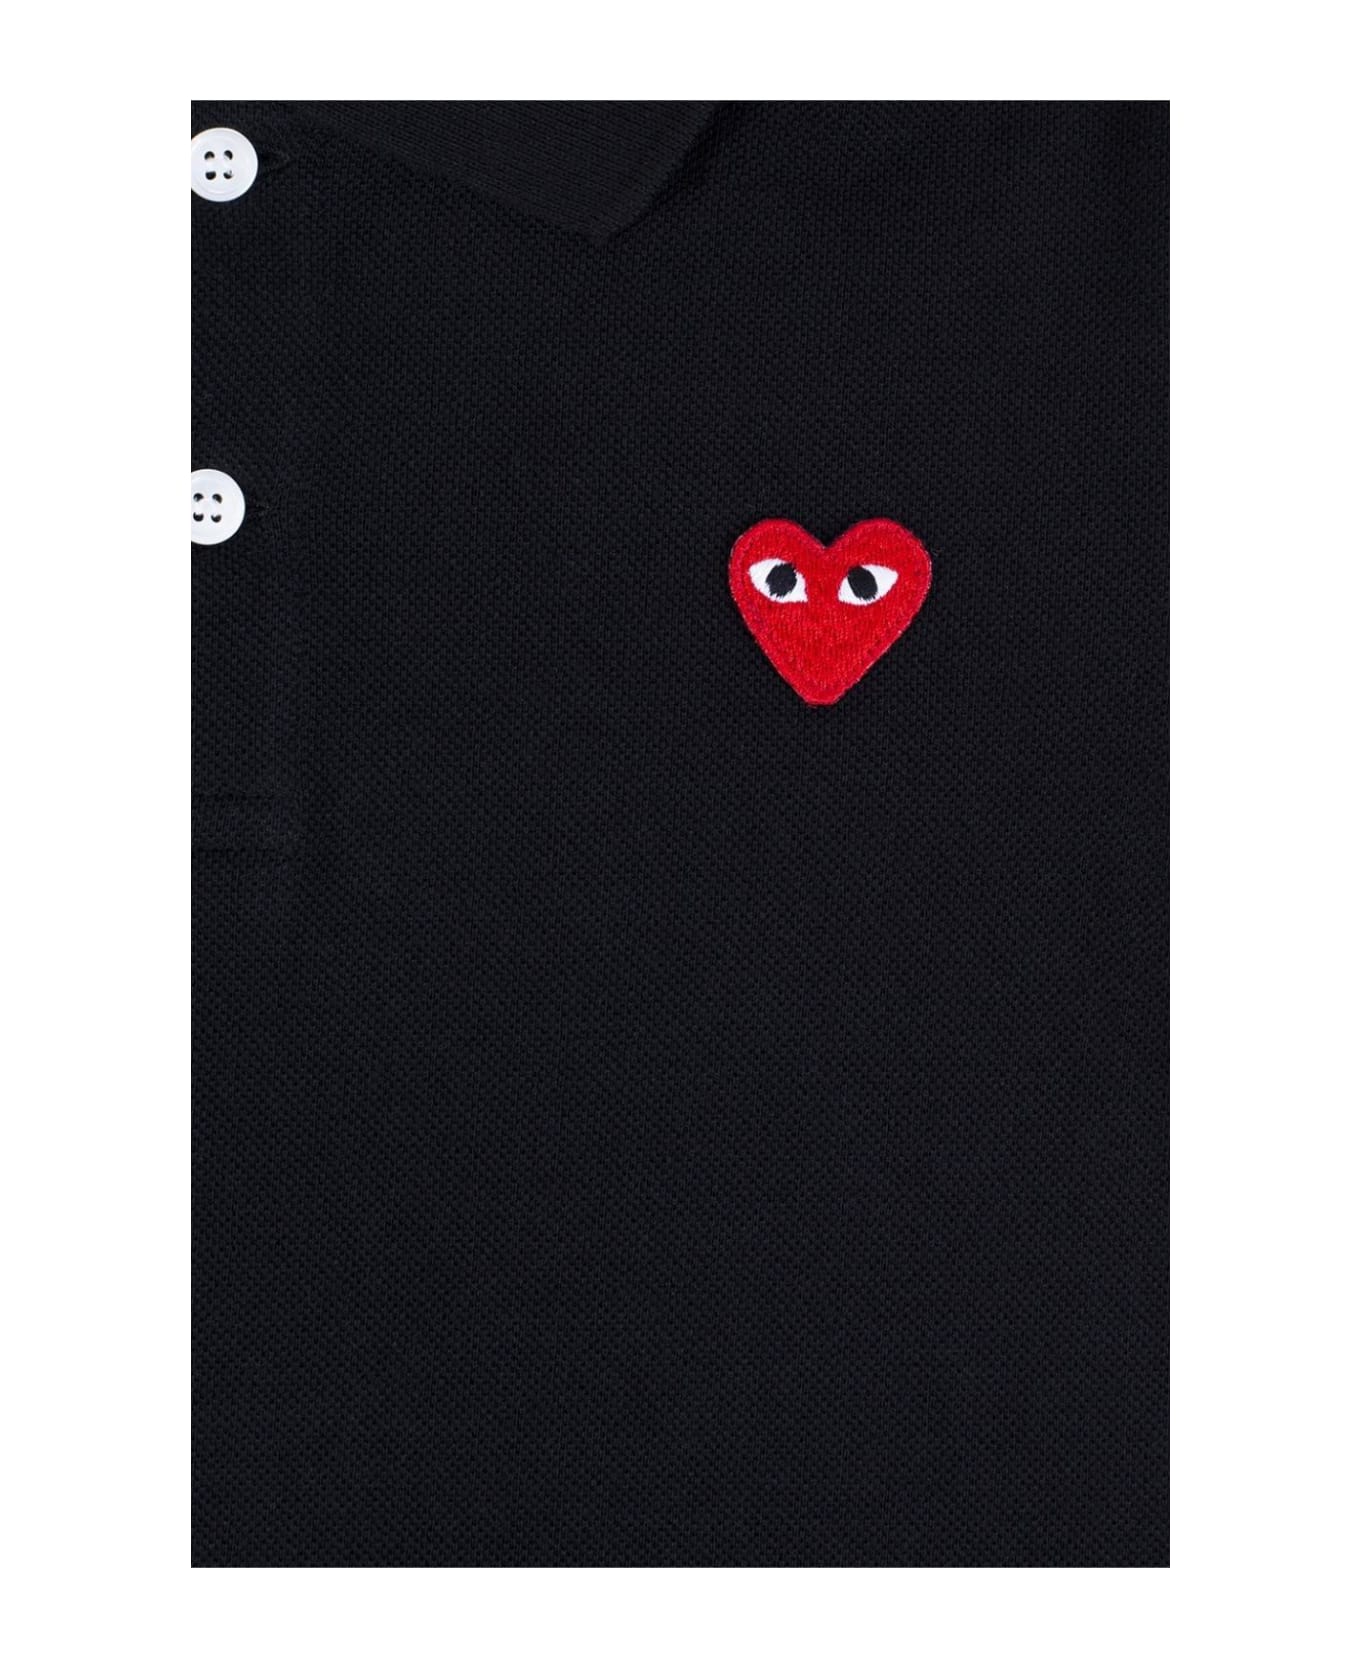 Comme des Garçons Play Heart Patch Polo Shirt - Nero シャツ